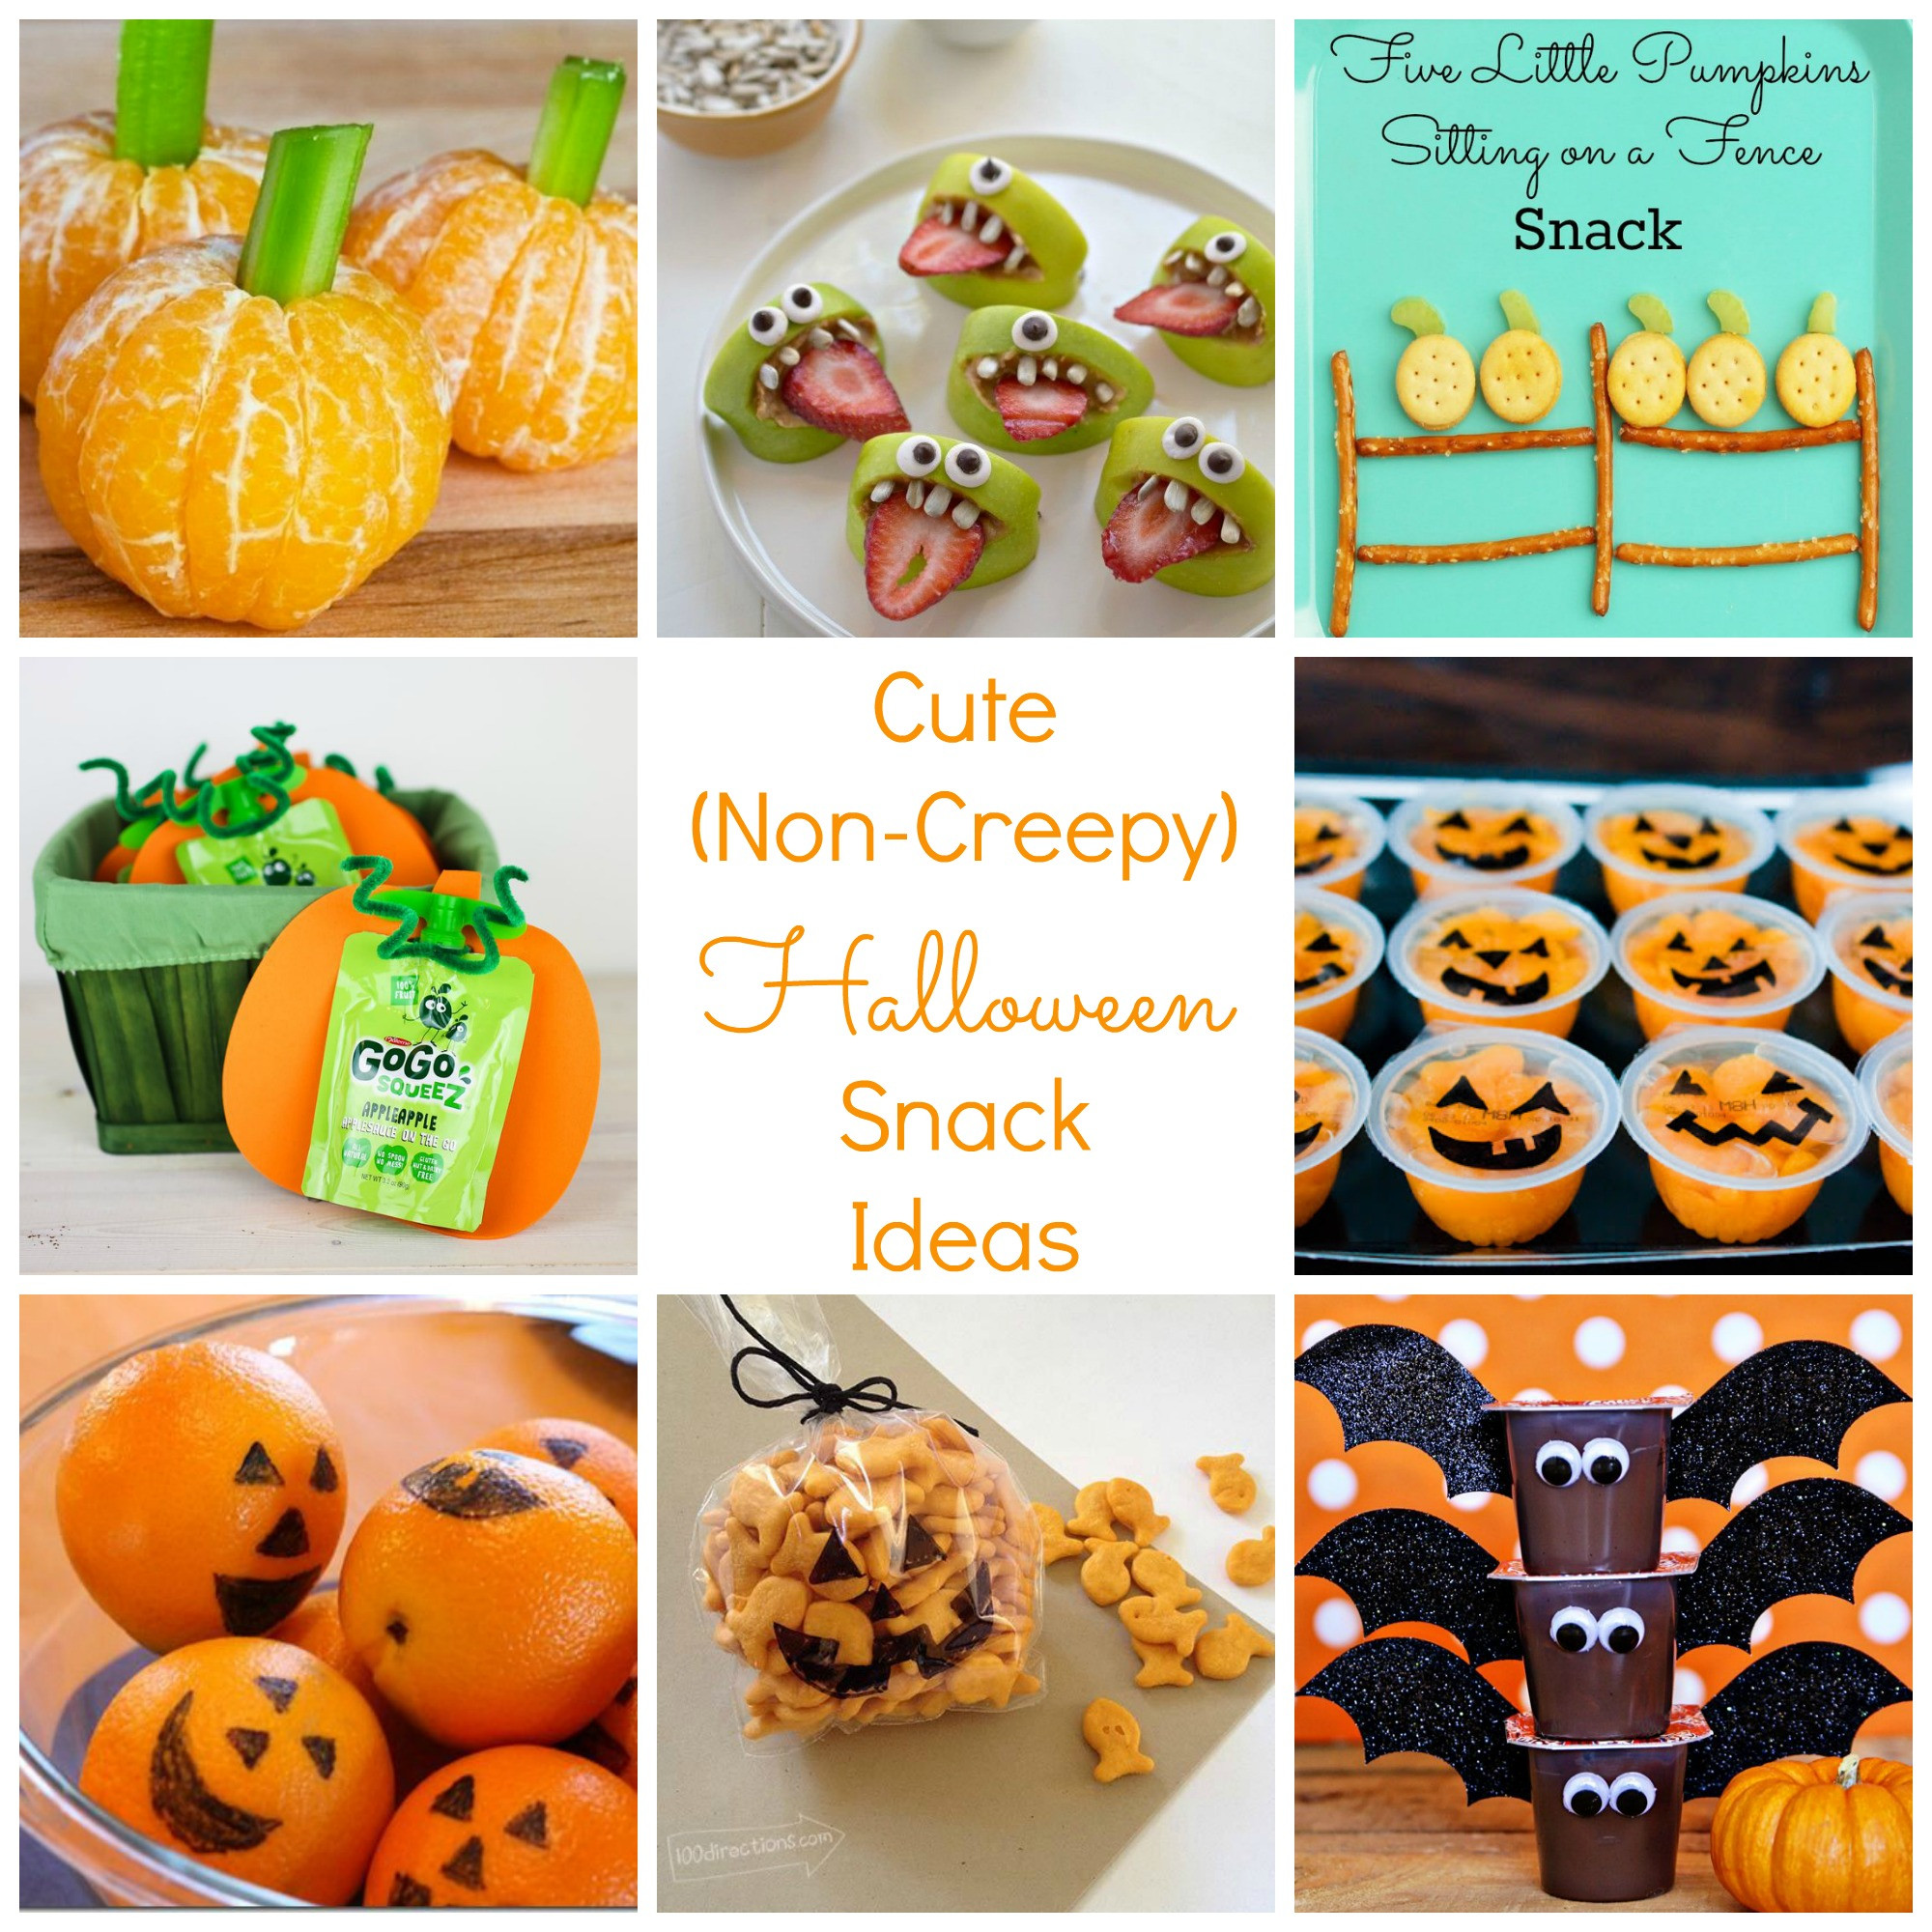 Cute Halloween Party Ideas
 Cute Non Creepy Halloween and Fall Snack Ideas Happy